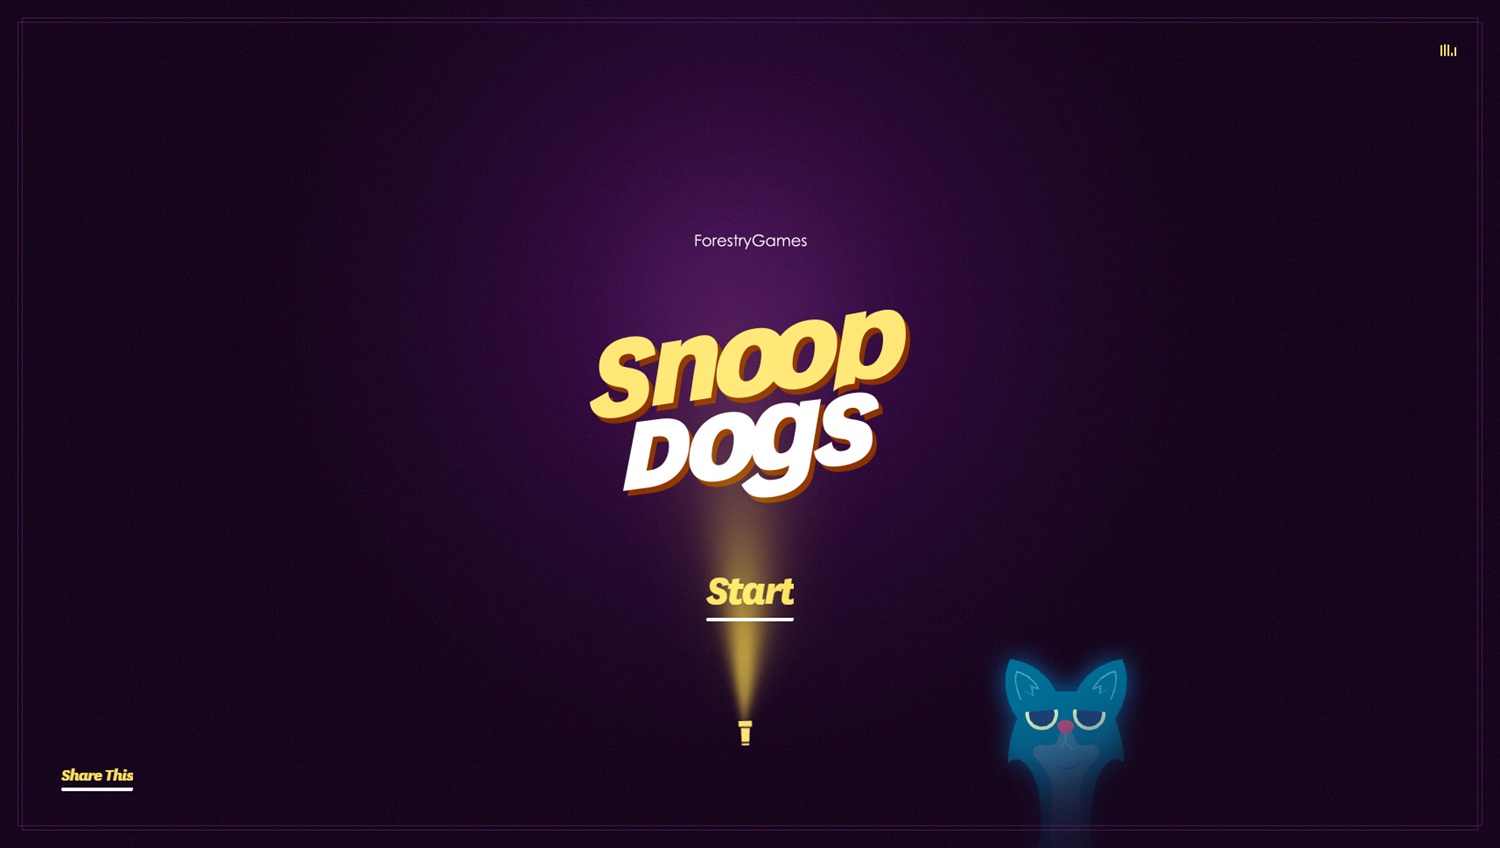 Snoop Dogs Game Welcome Screen Screenshot.